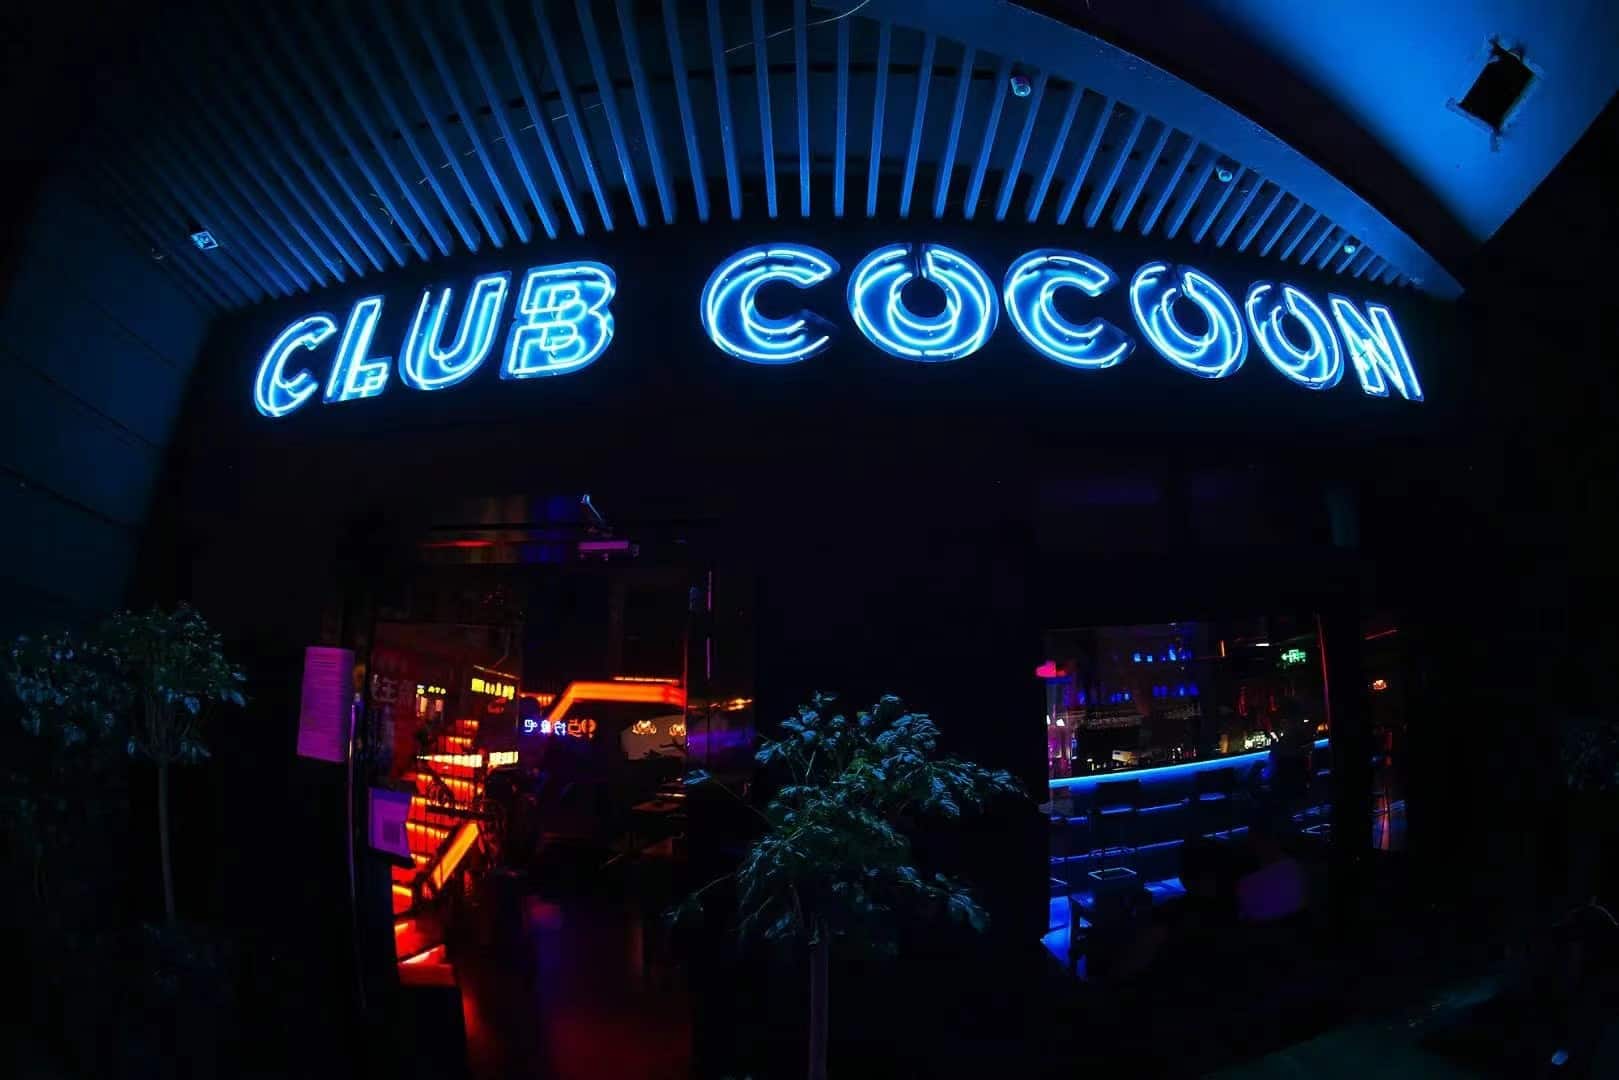 Club Cocoon Chengdu chengdu expat